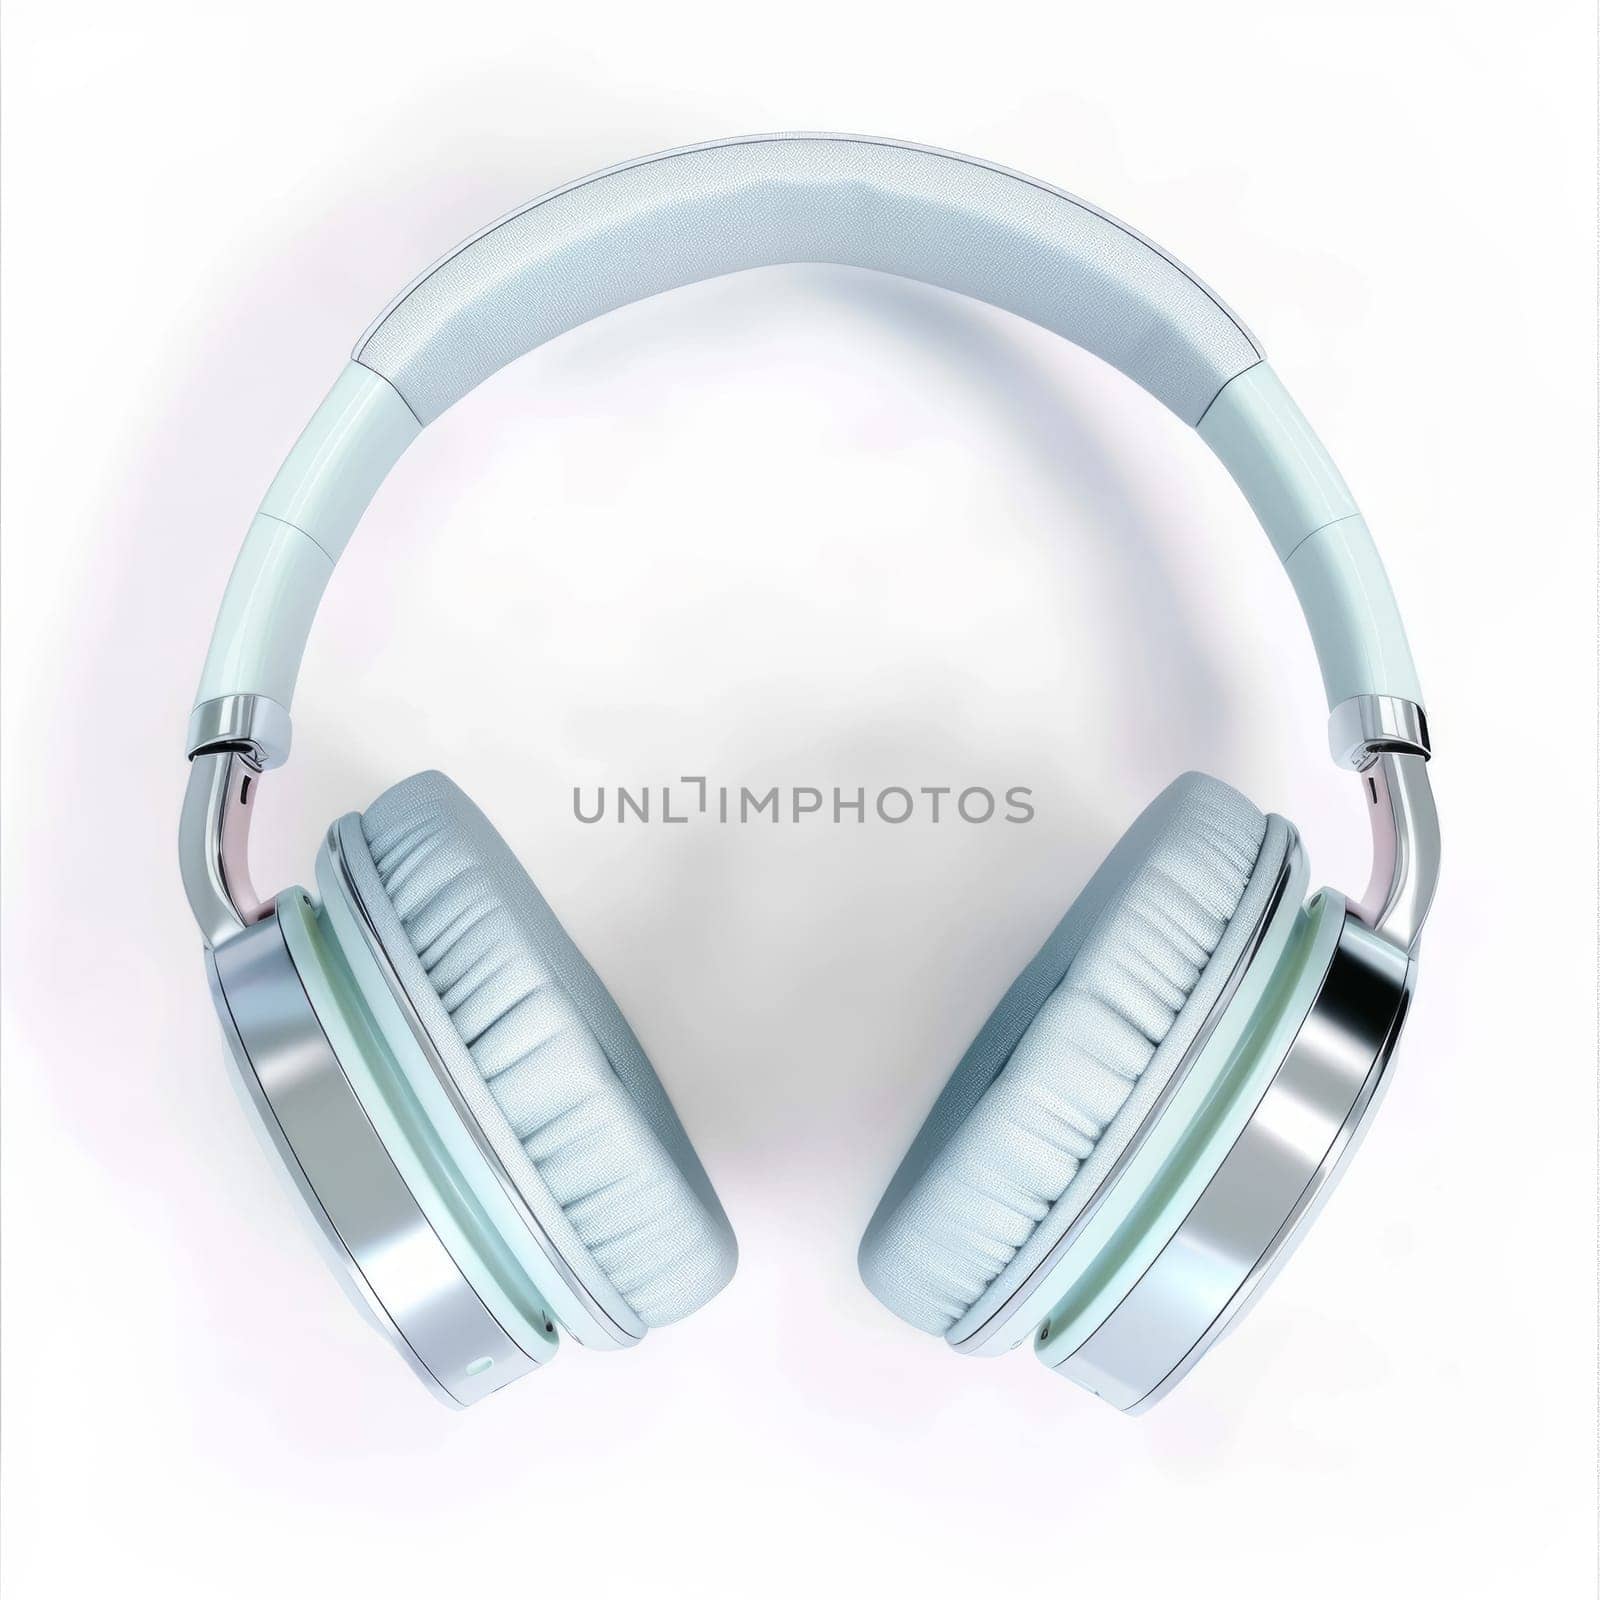 Realistic 3D Headphones on White Background. Headphones Isolated Mockup. by iliris